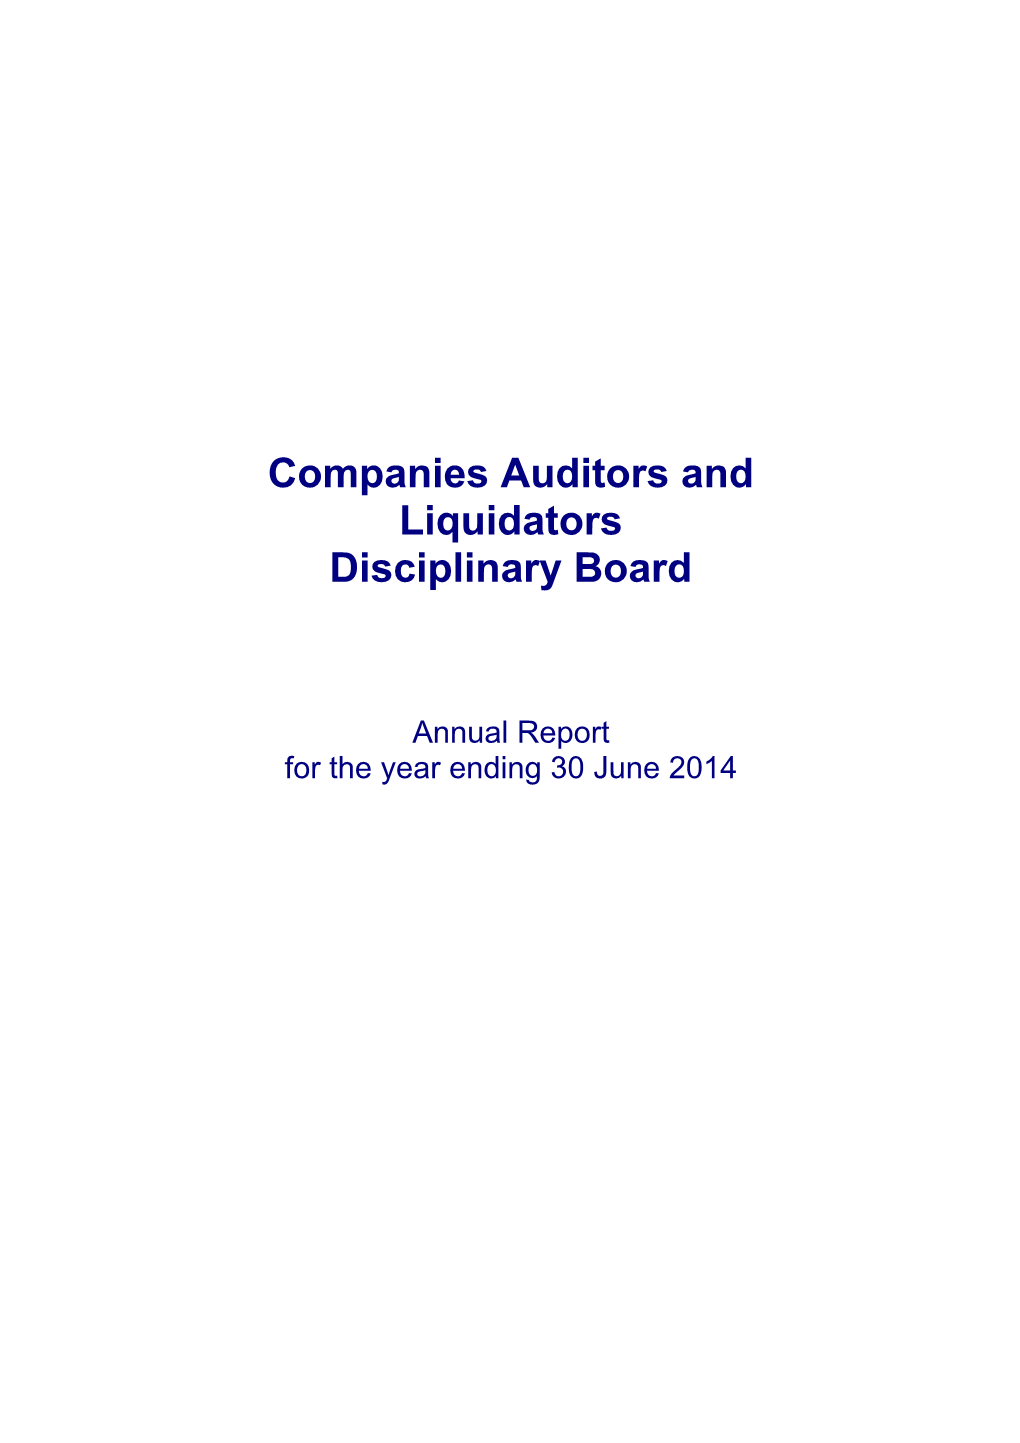 Companies Auditors and Liquidators Disciplinary Board